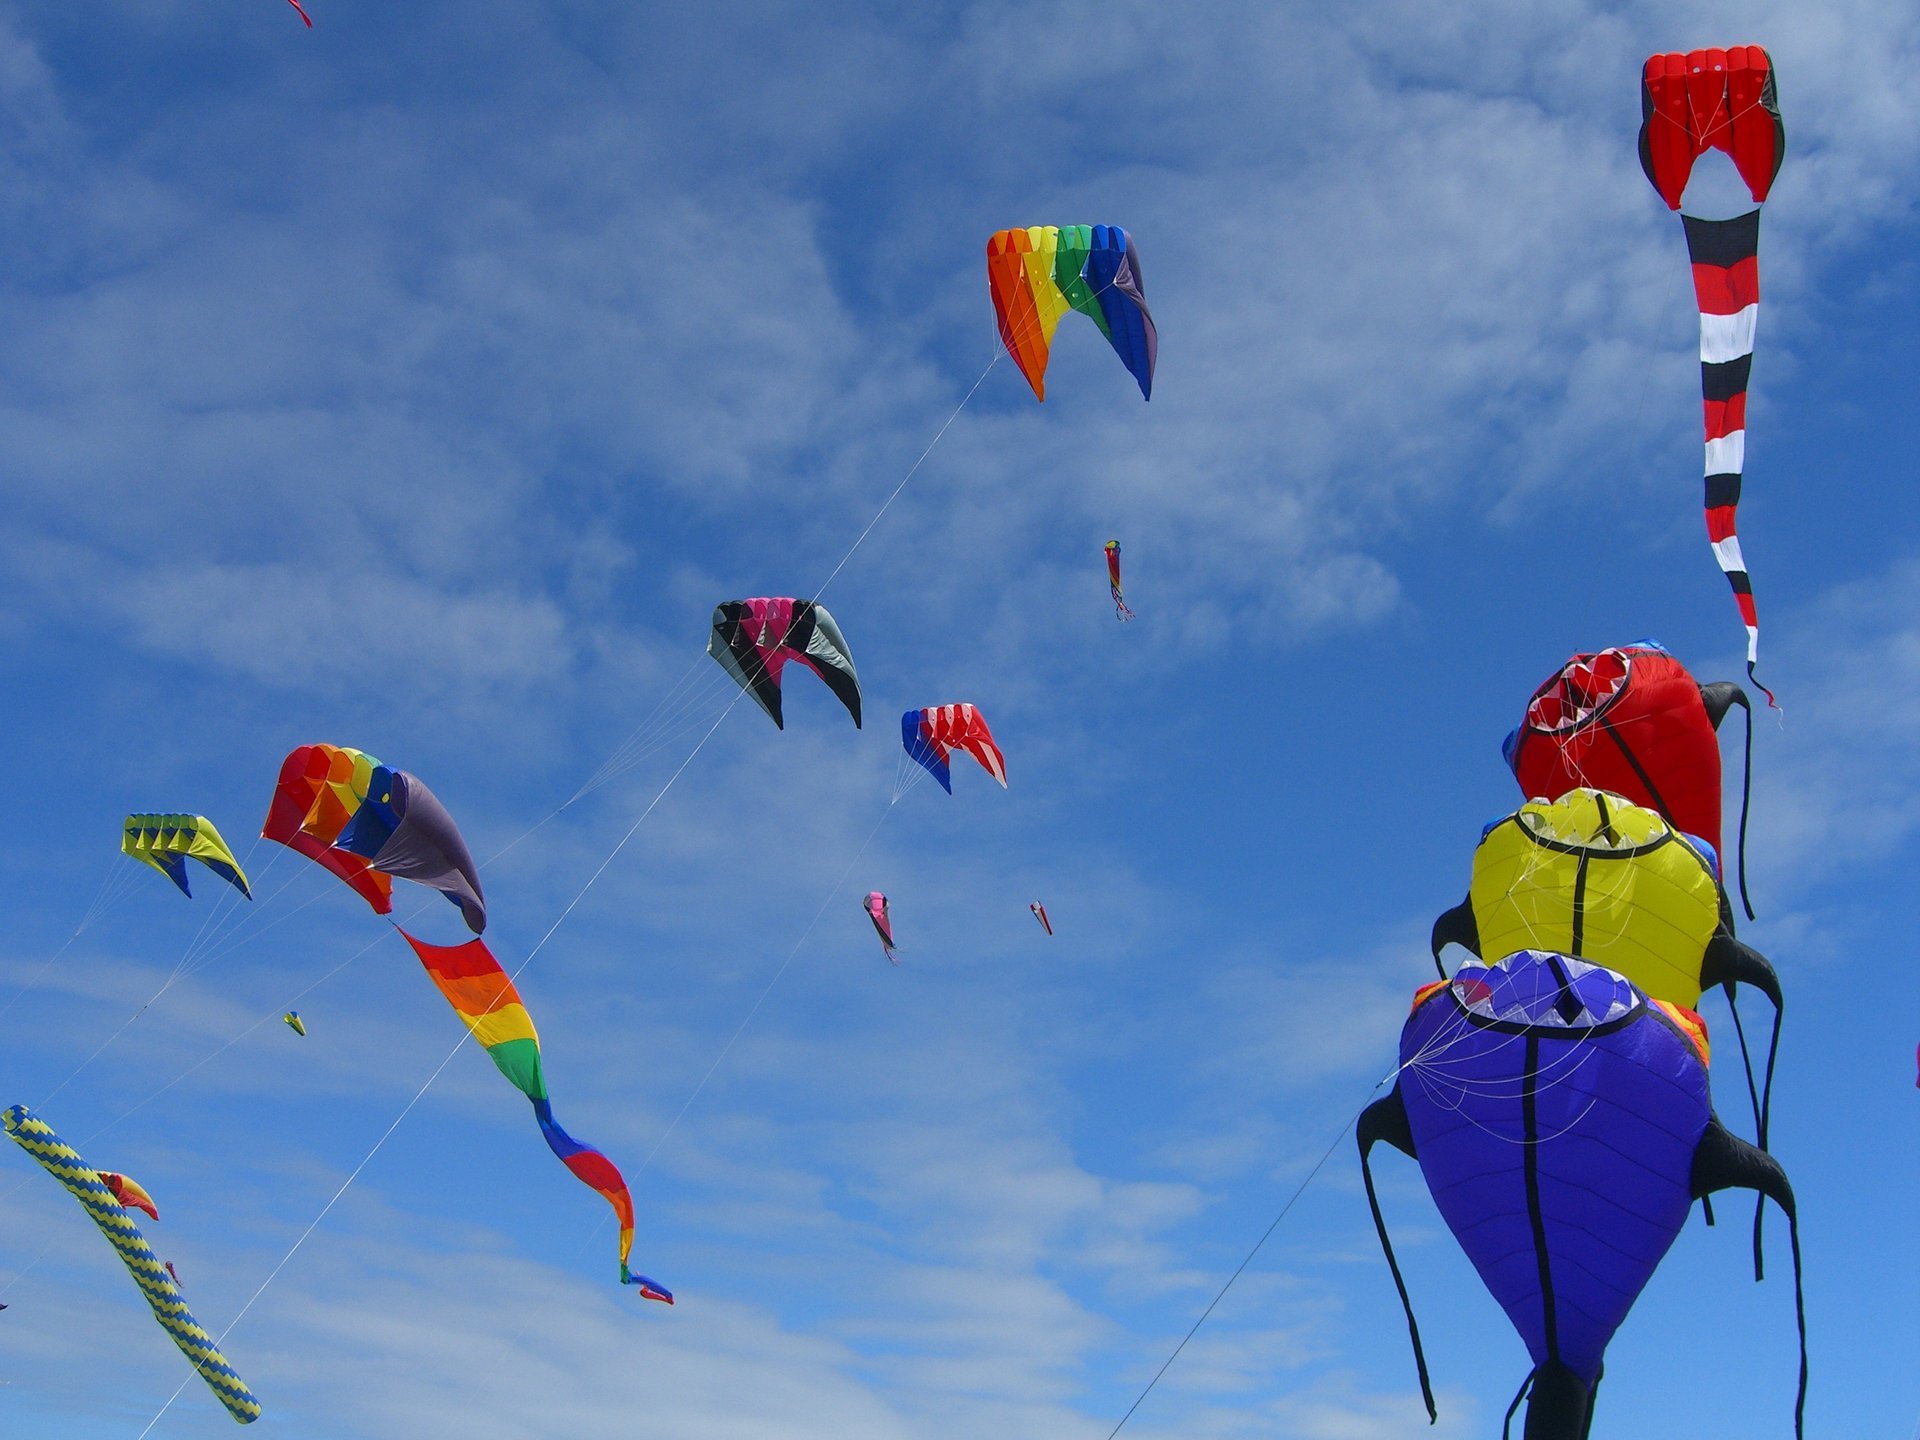 Washington State International Kite Festival 2021 in Seattle